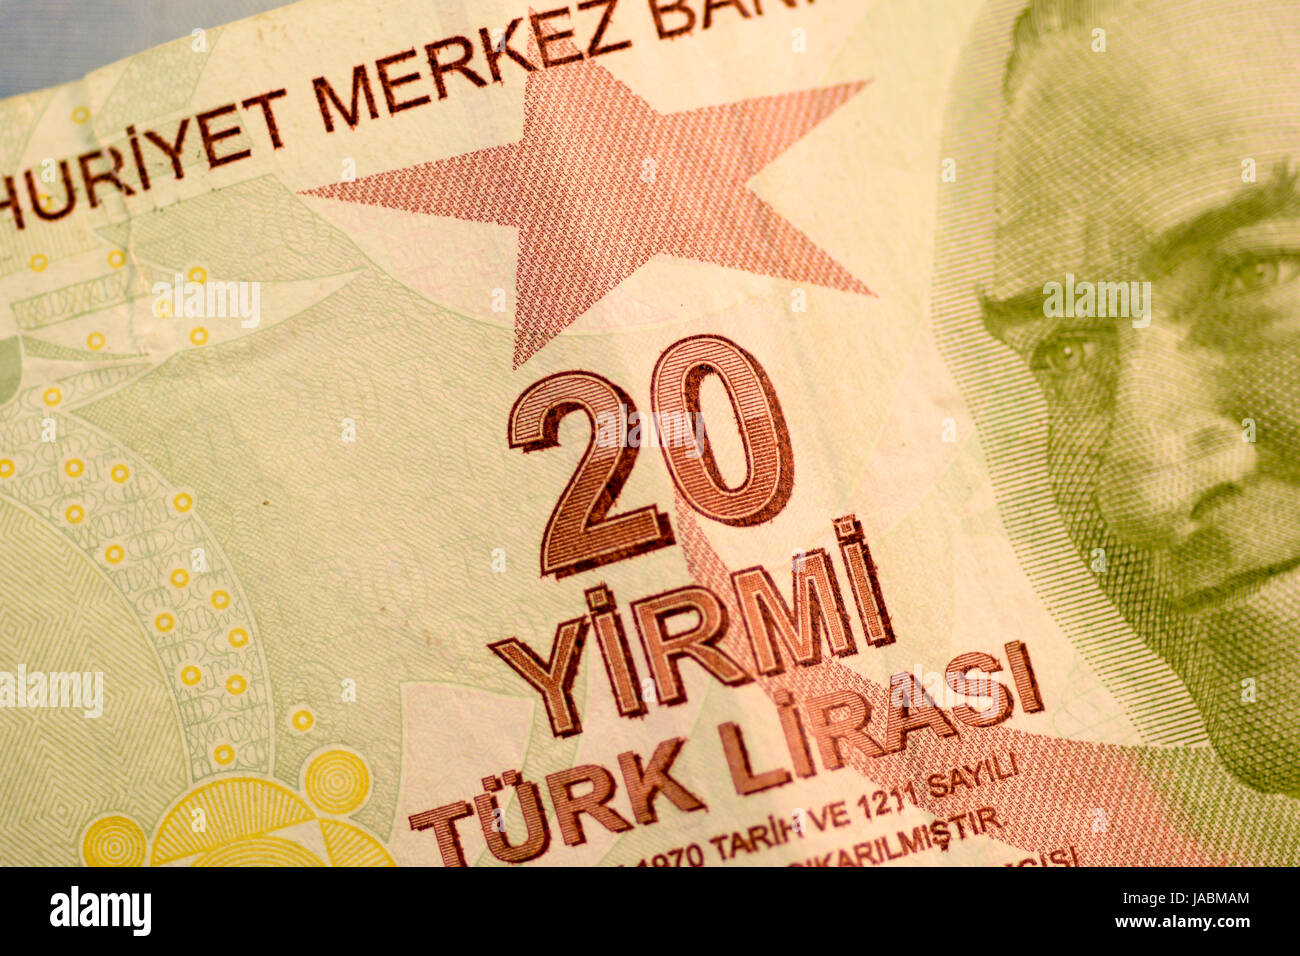 Chiudere la lira turca valuta nota, lira turca Türk lirası (Turco) 200 Türk Lirası ₺200 banconota (complementare) Codice ISO 4217 numero di prova Foto Stock